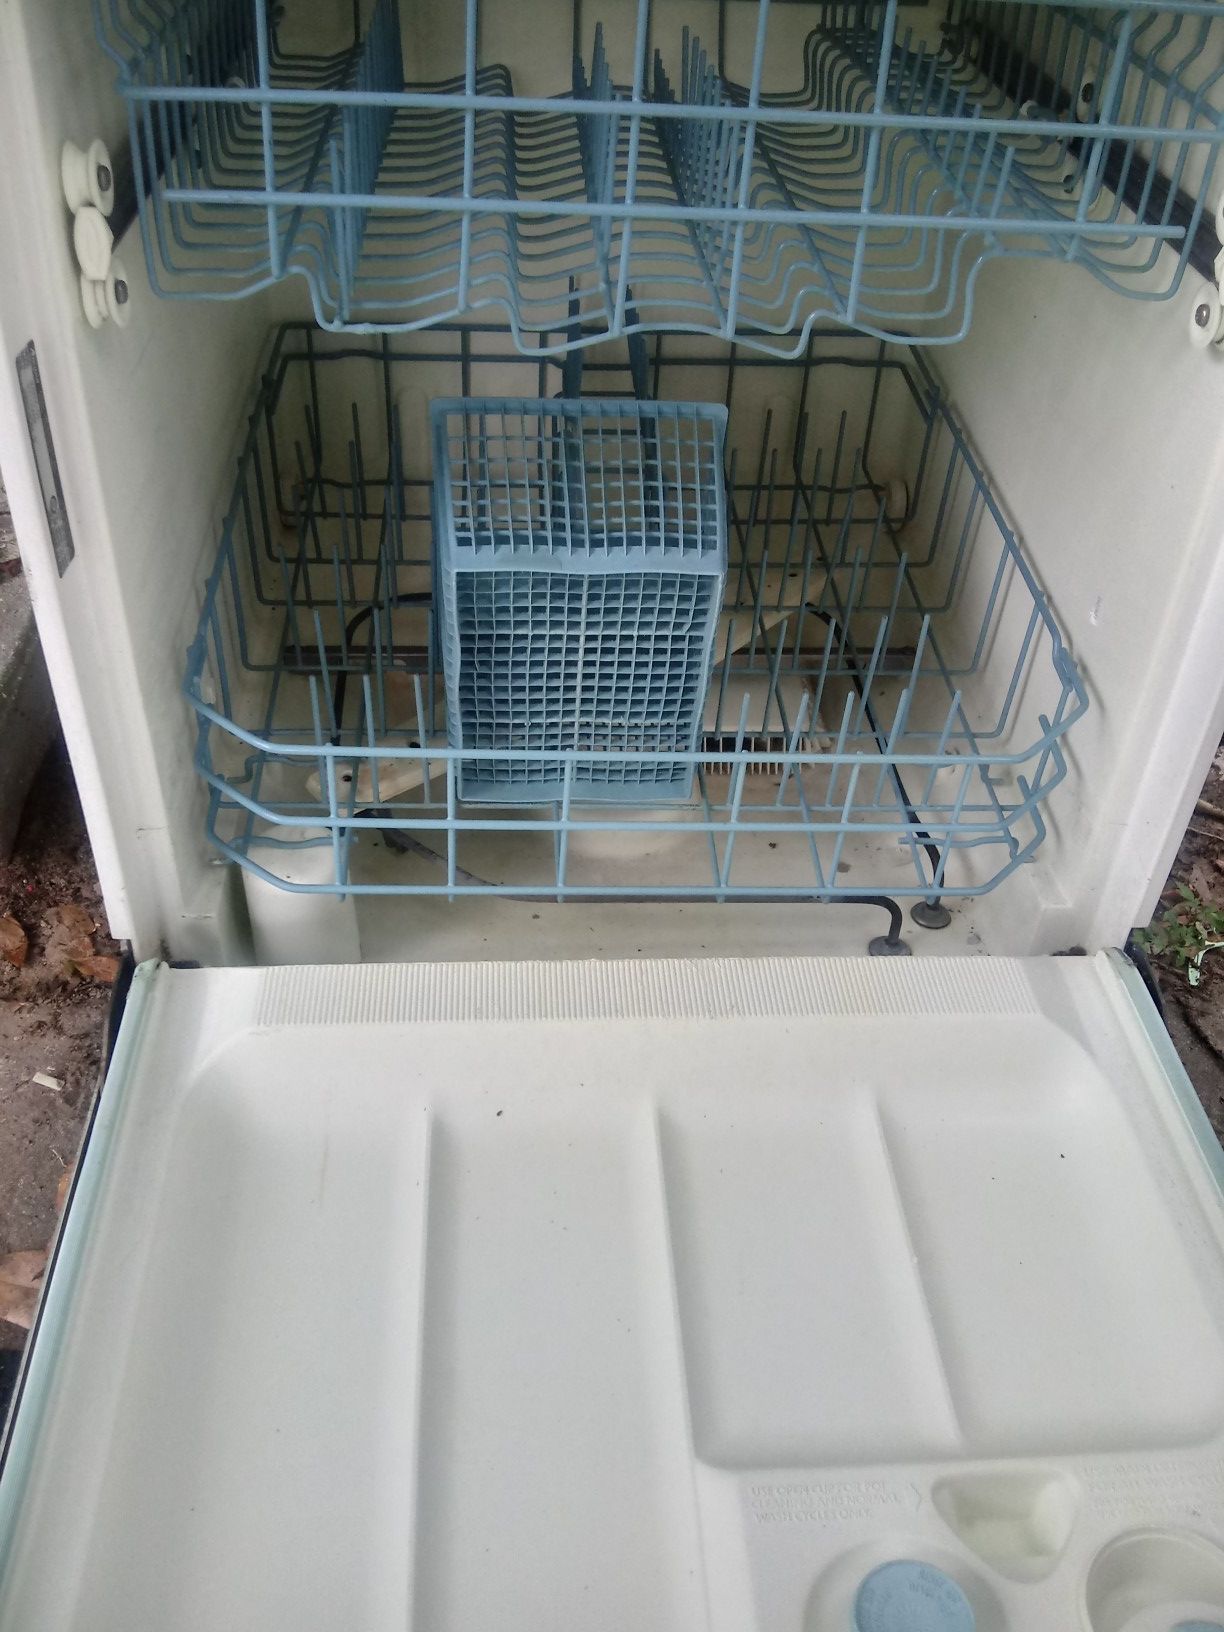 Amana Master clean 5000 dishwasher